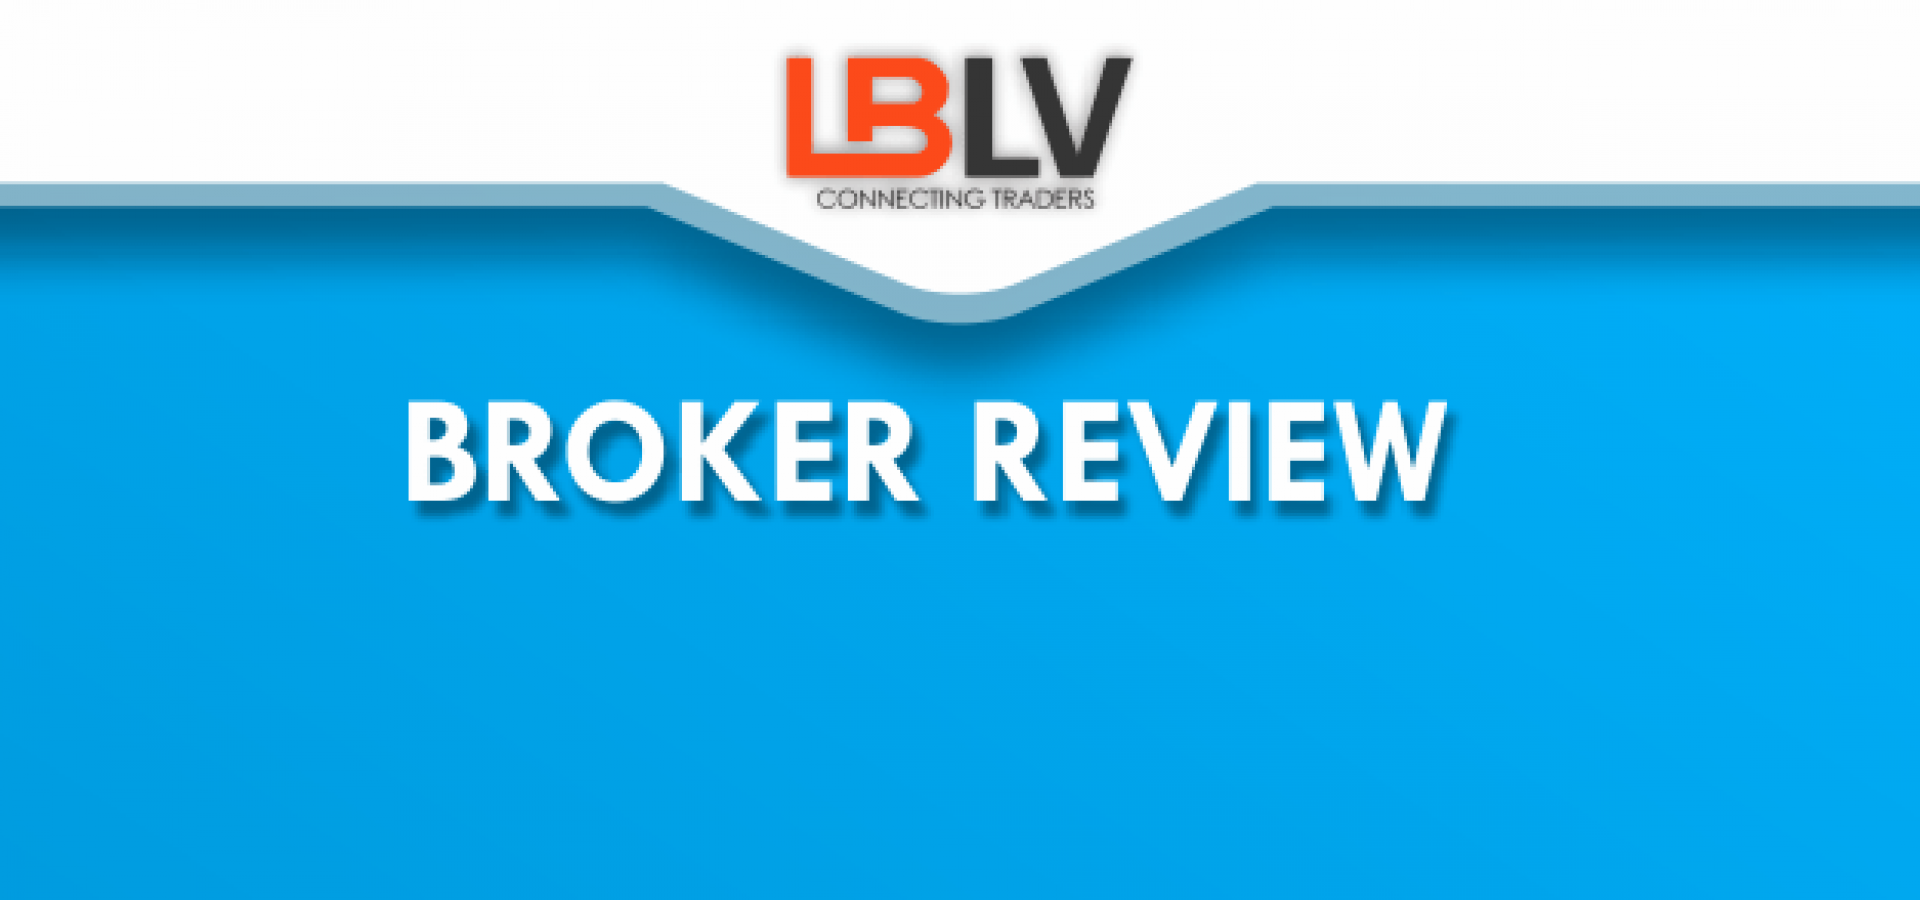 LBLV Broker Review